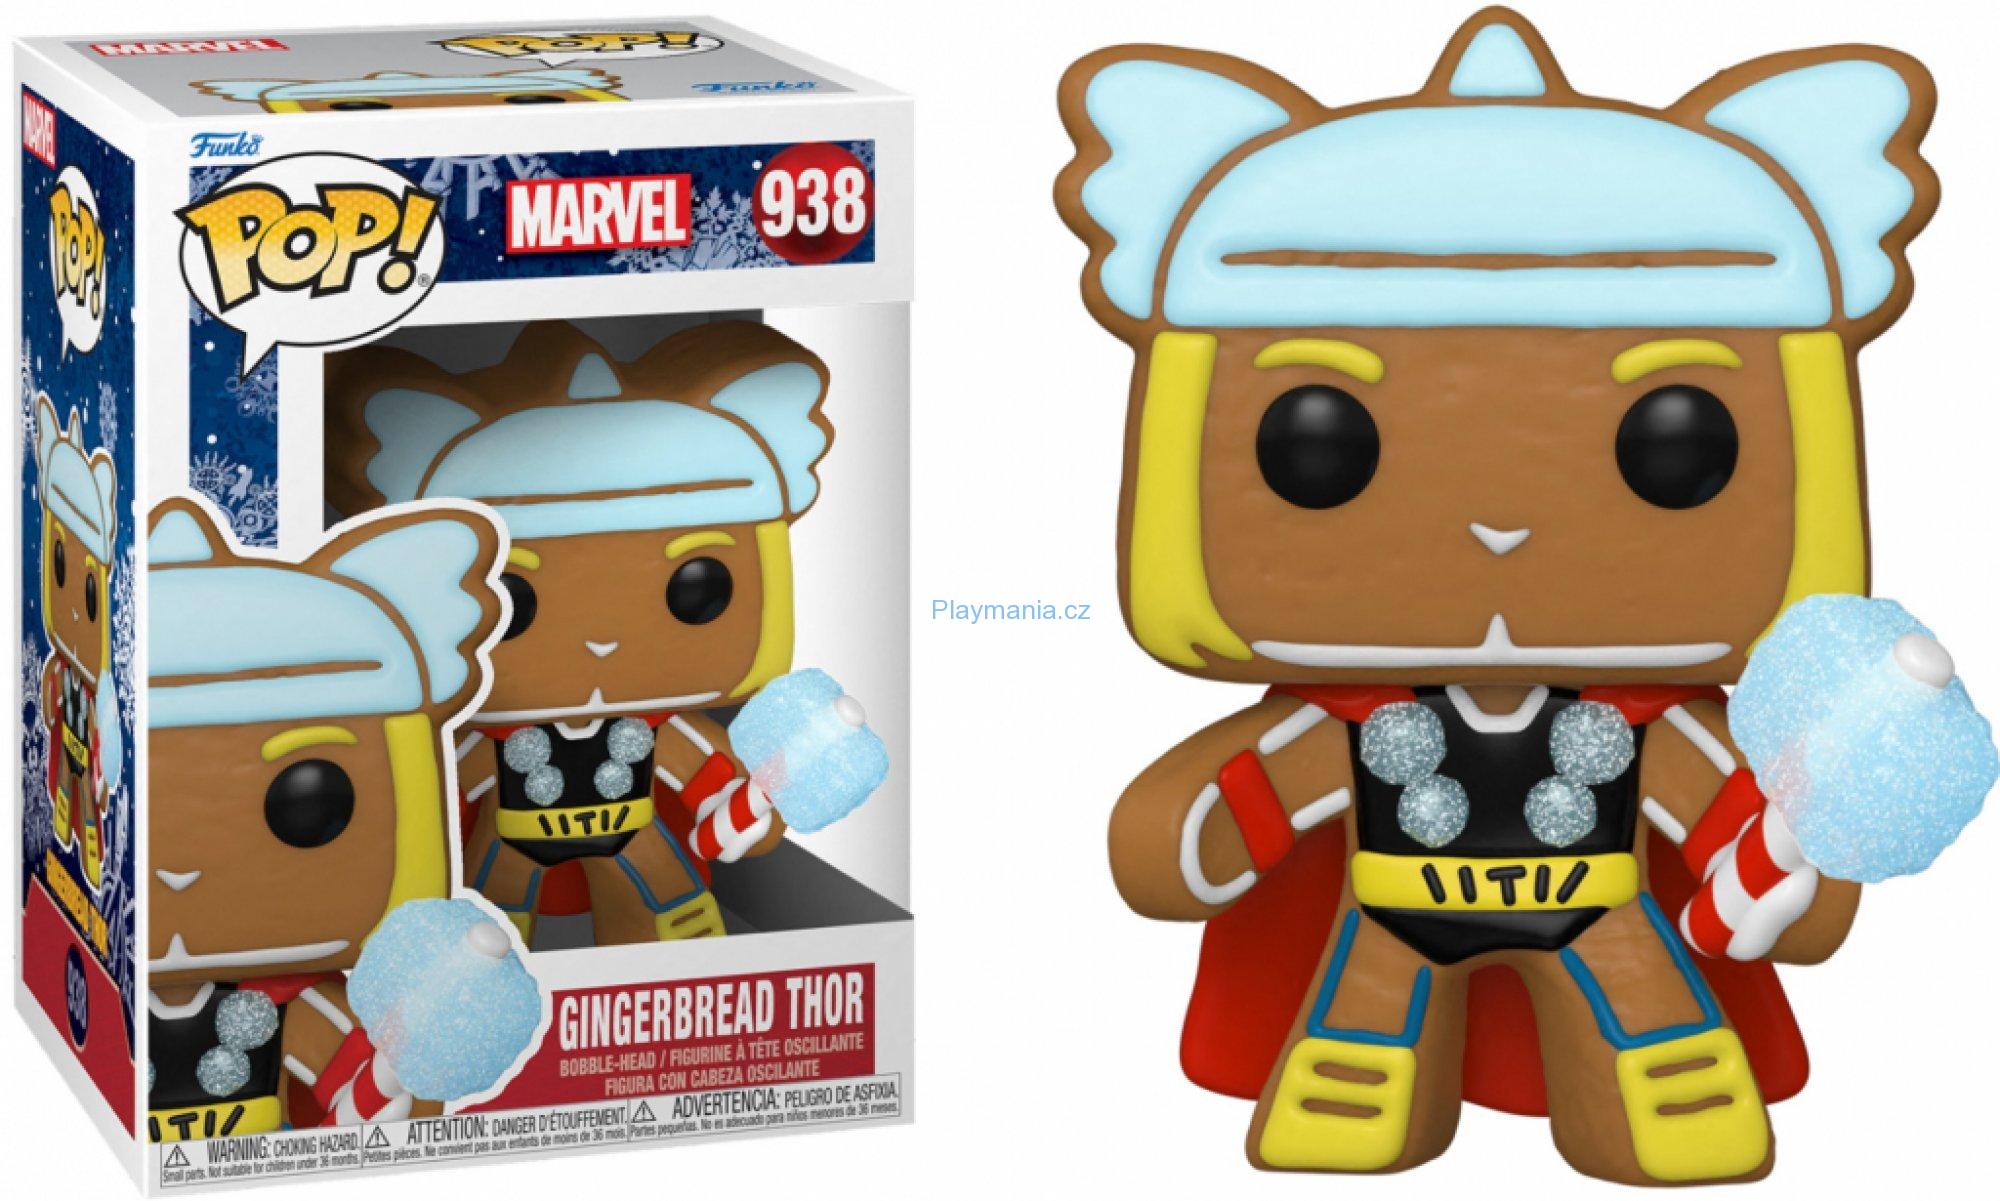 Funko Pop!Marvel Gingerbread Thor (938)